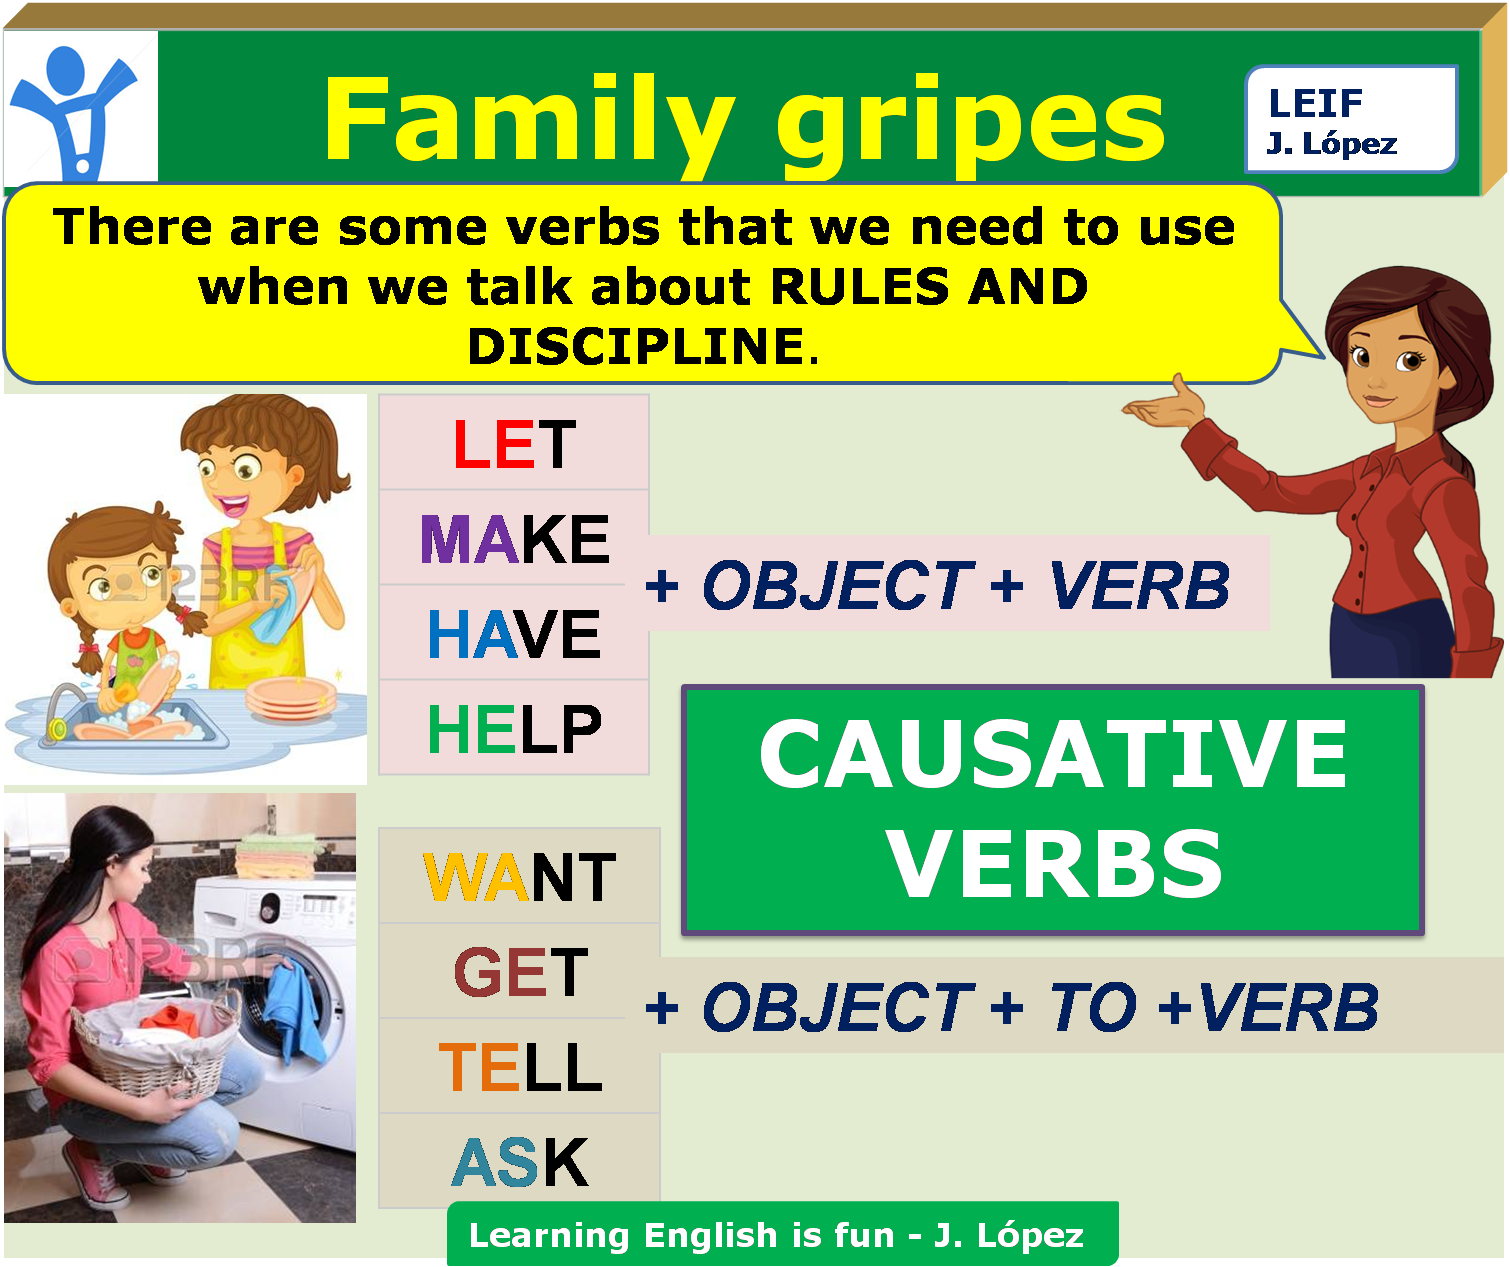 Near глагол. Causative verbs. Make get have правило. Causative verbs в английском языке. Каузативные глаголы.